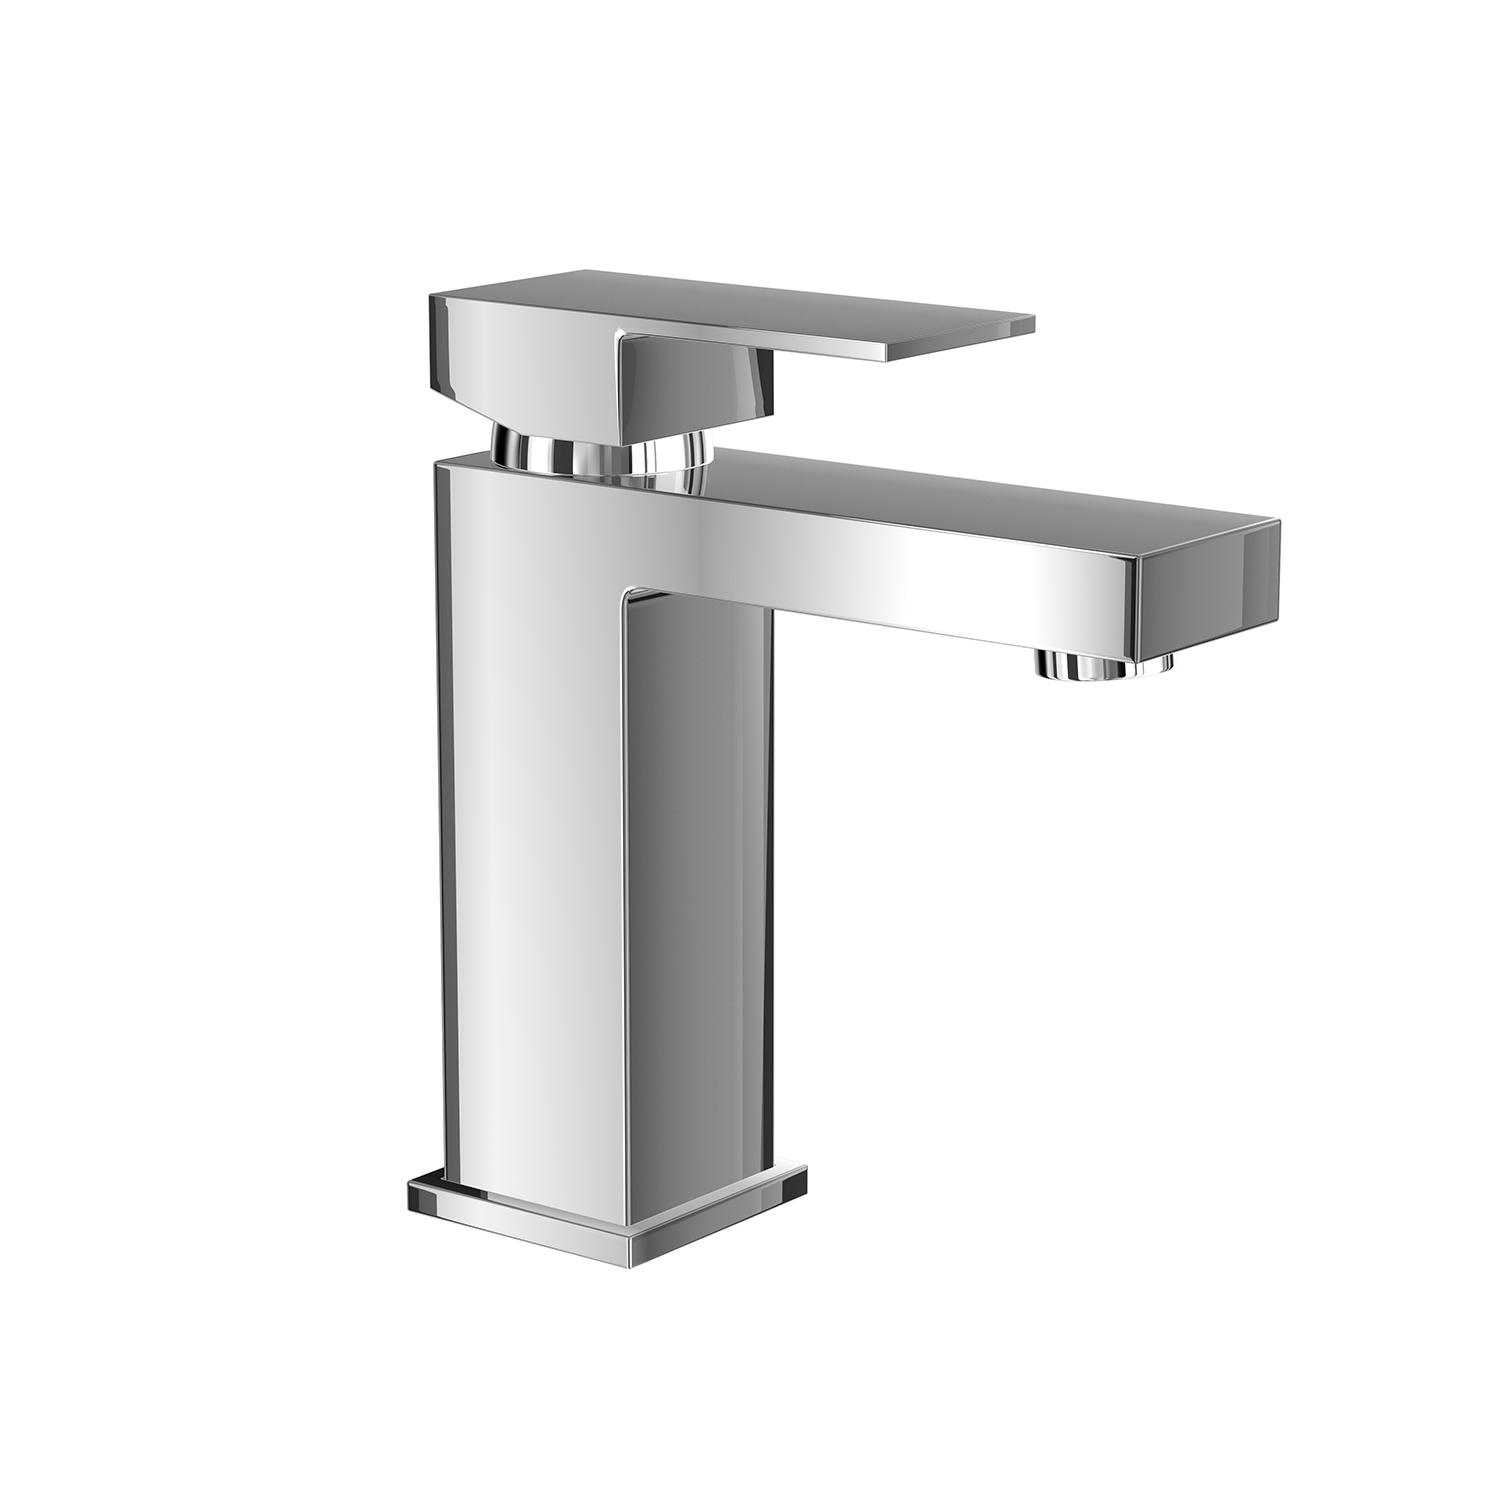 DAX Single Handle Bathroom Faucet, Brass Body, 4-5/16 x 6-1/2 Inches (DAX-6951A)